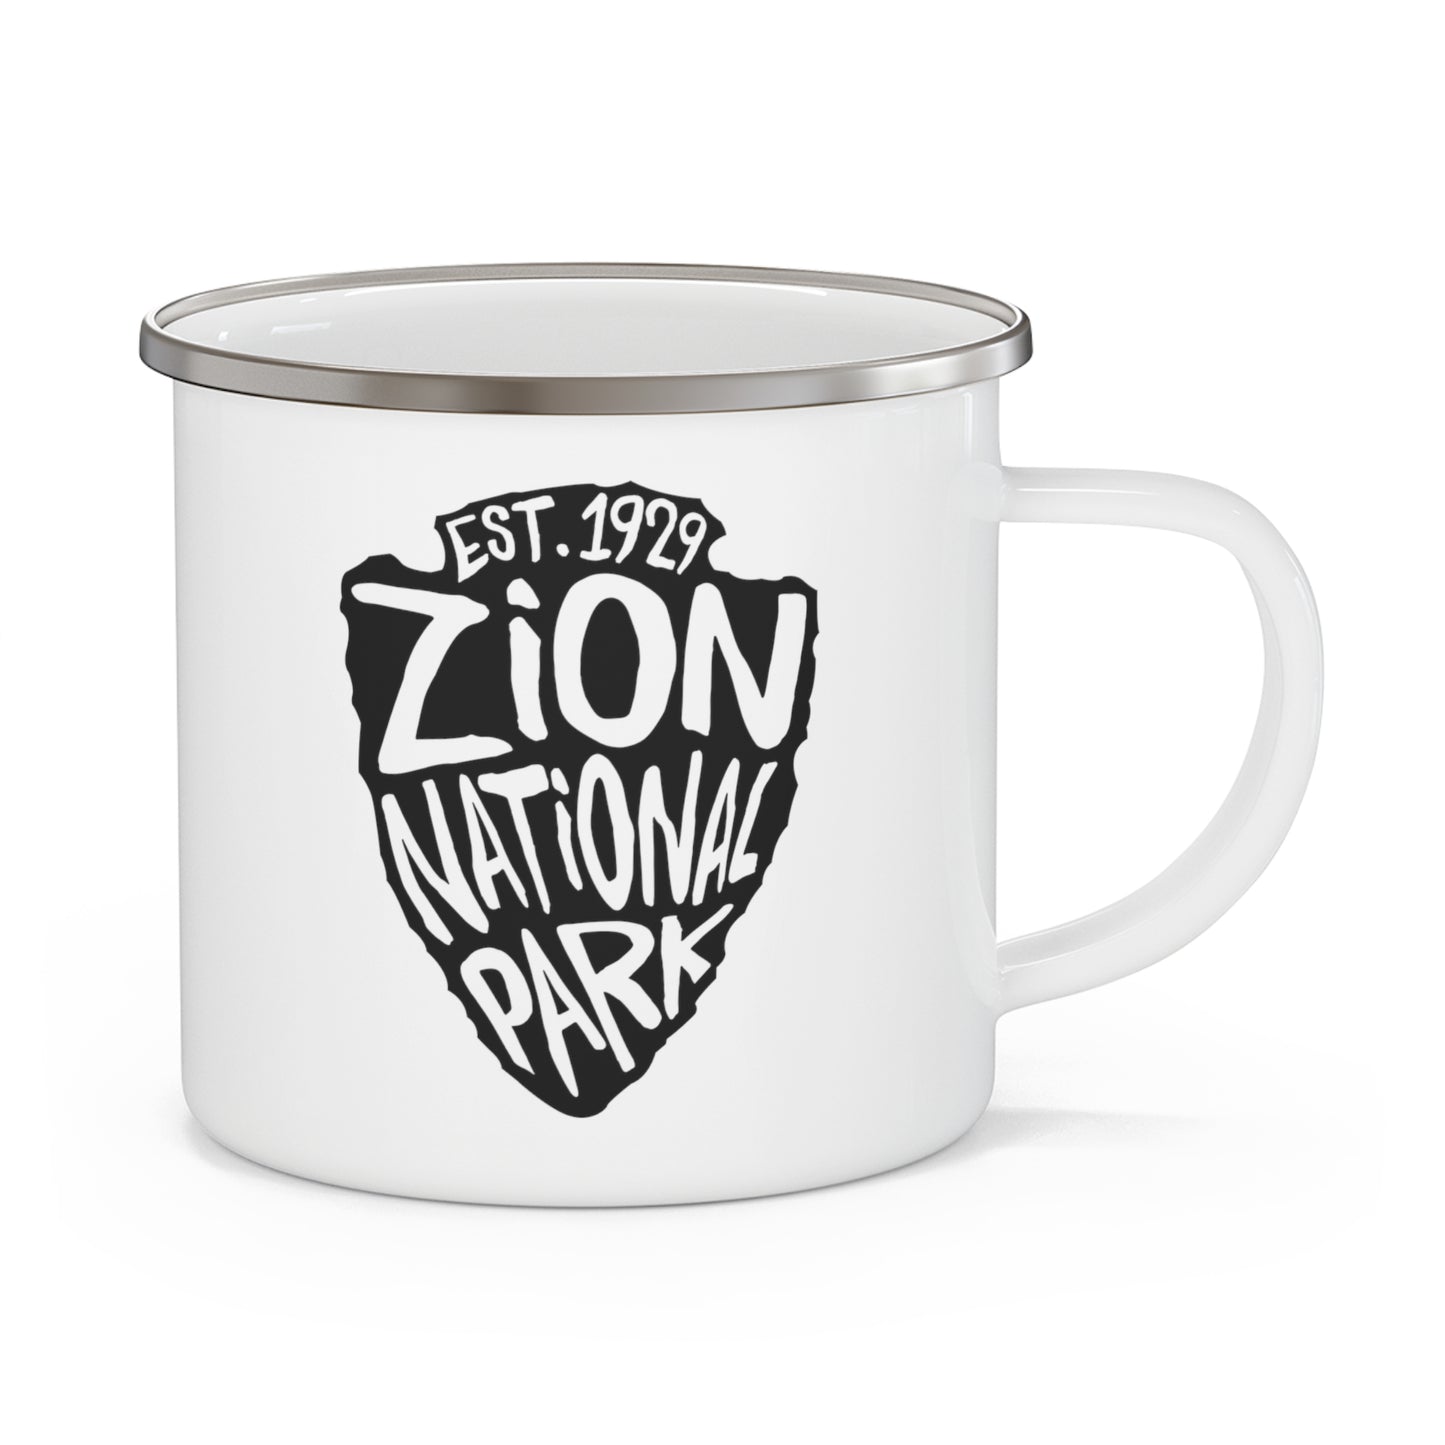 Zion National Park Enamel Camping Mug - Arrowhead